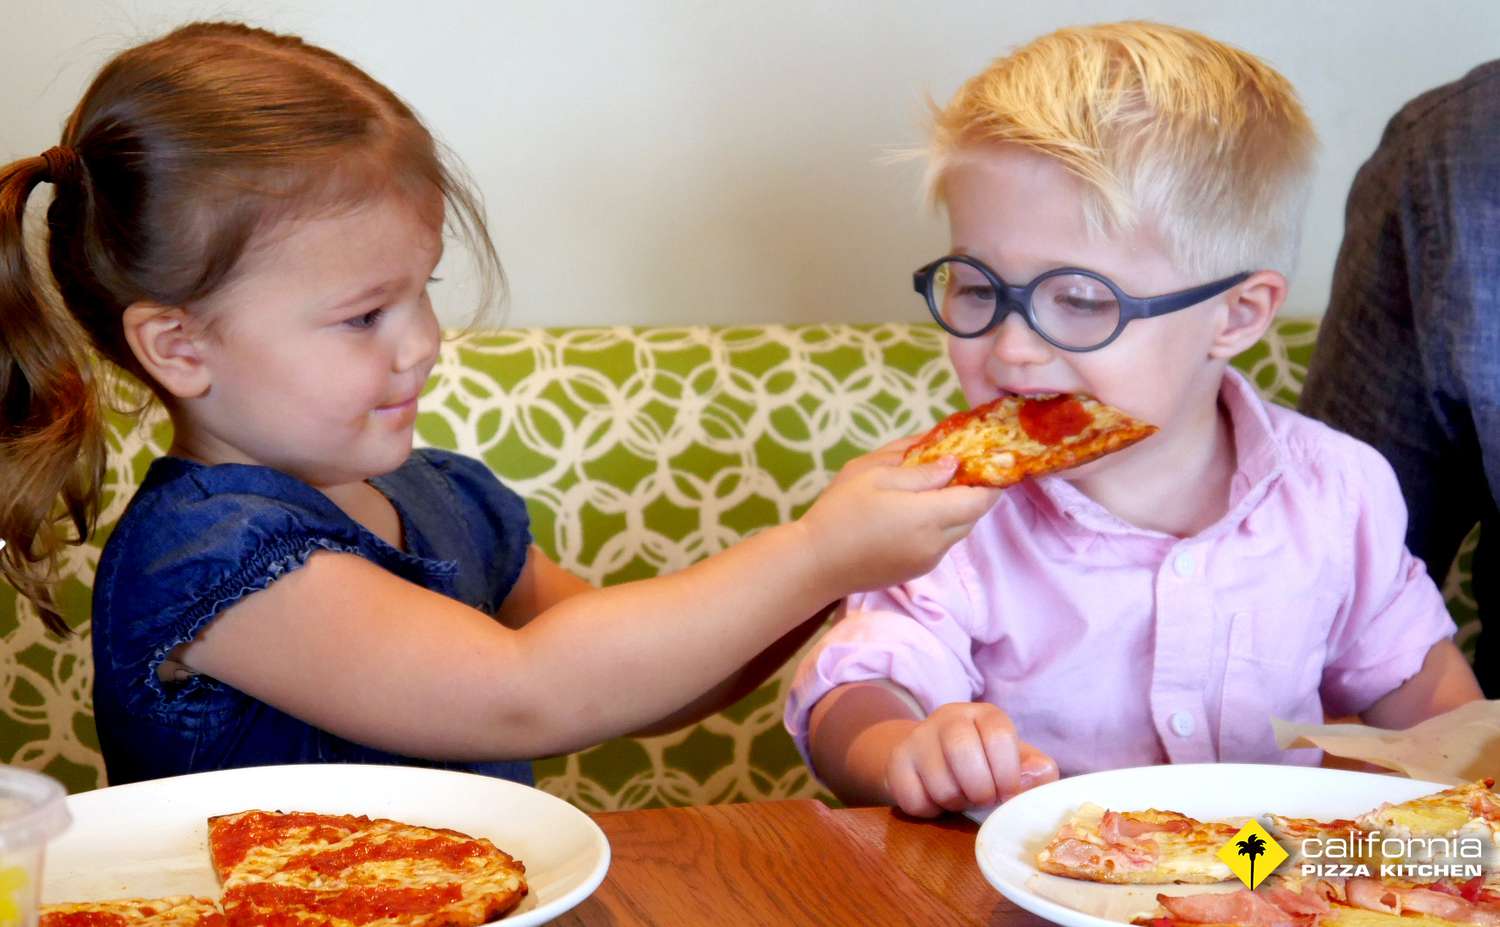 California Pizza Kitchen Just Added Cauliflower Crust Pizzas To Their Kids Menu Parents